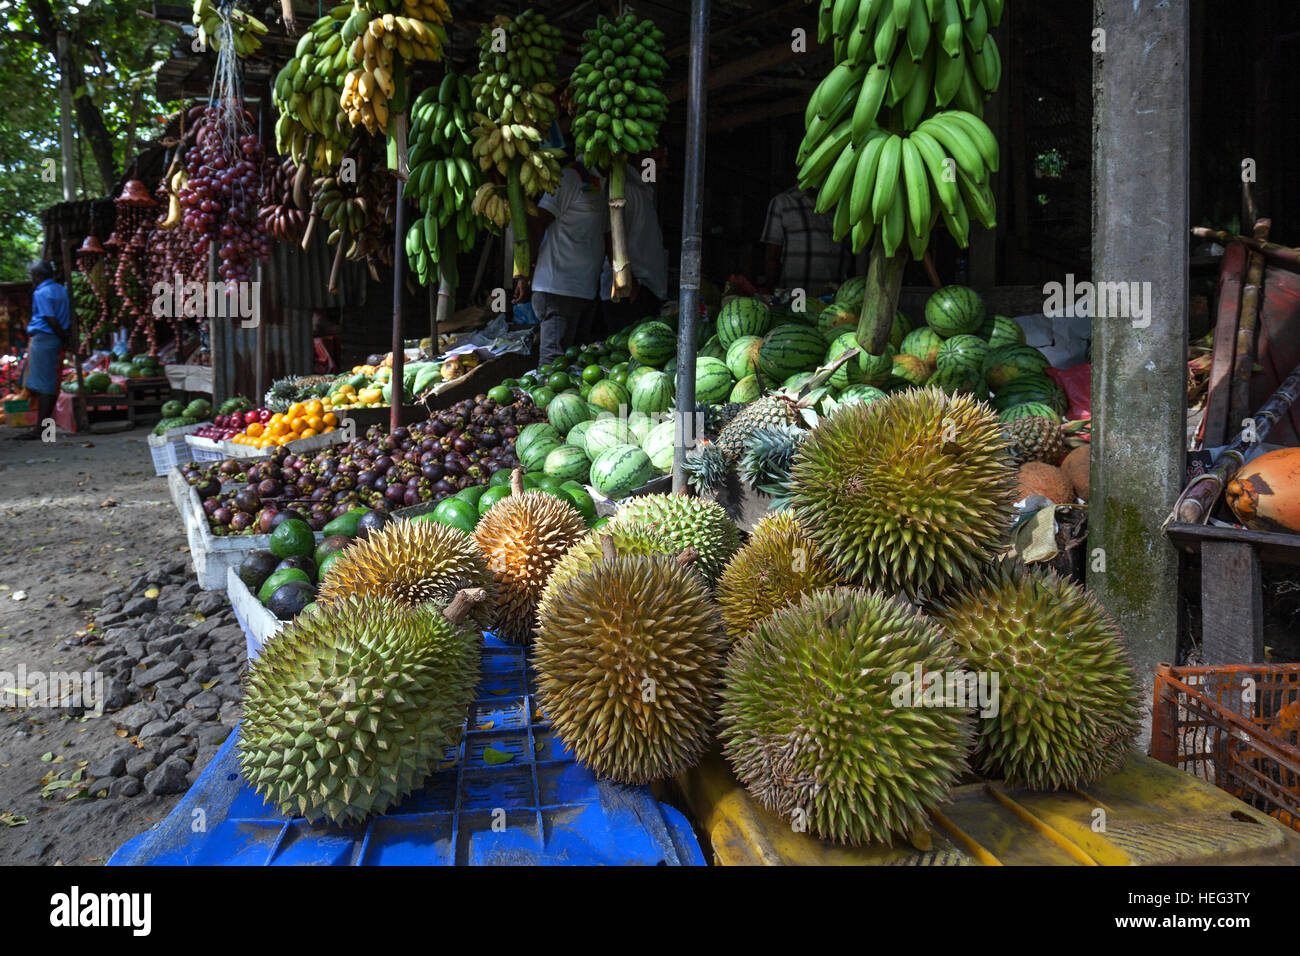 Fruit stall, durian, bananas, melons, Central Province, Sri Lanka Stock Photo